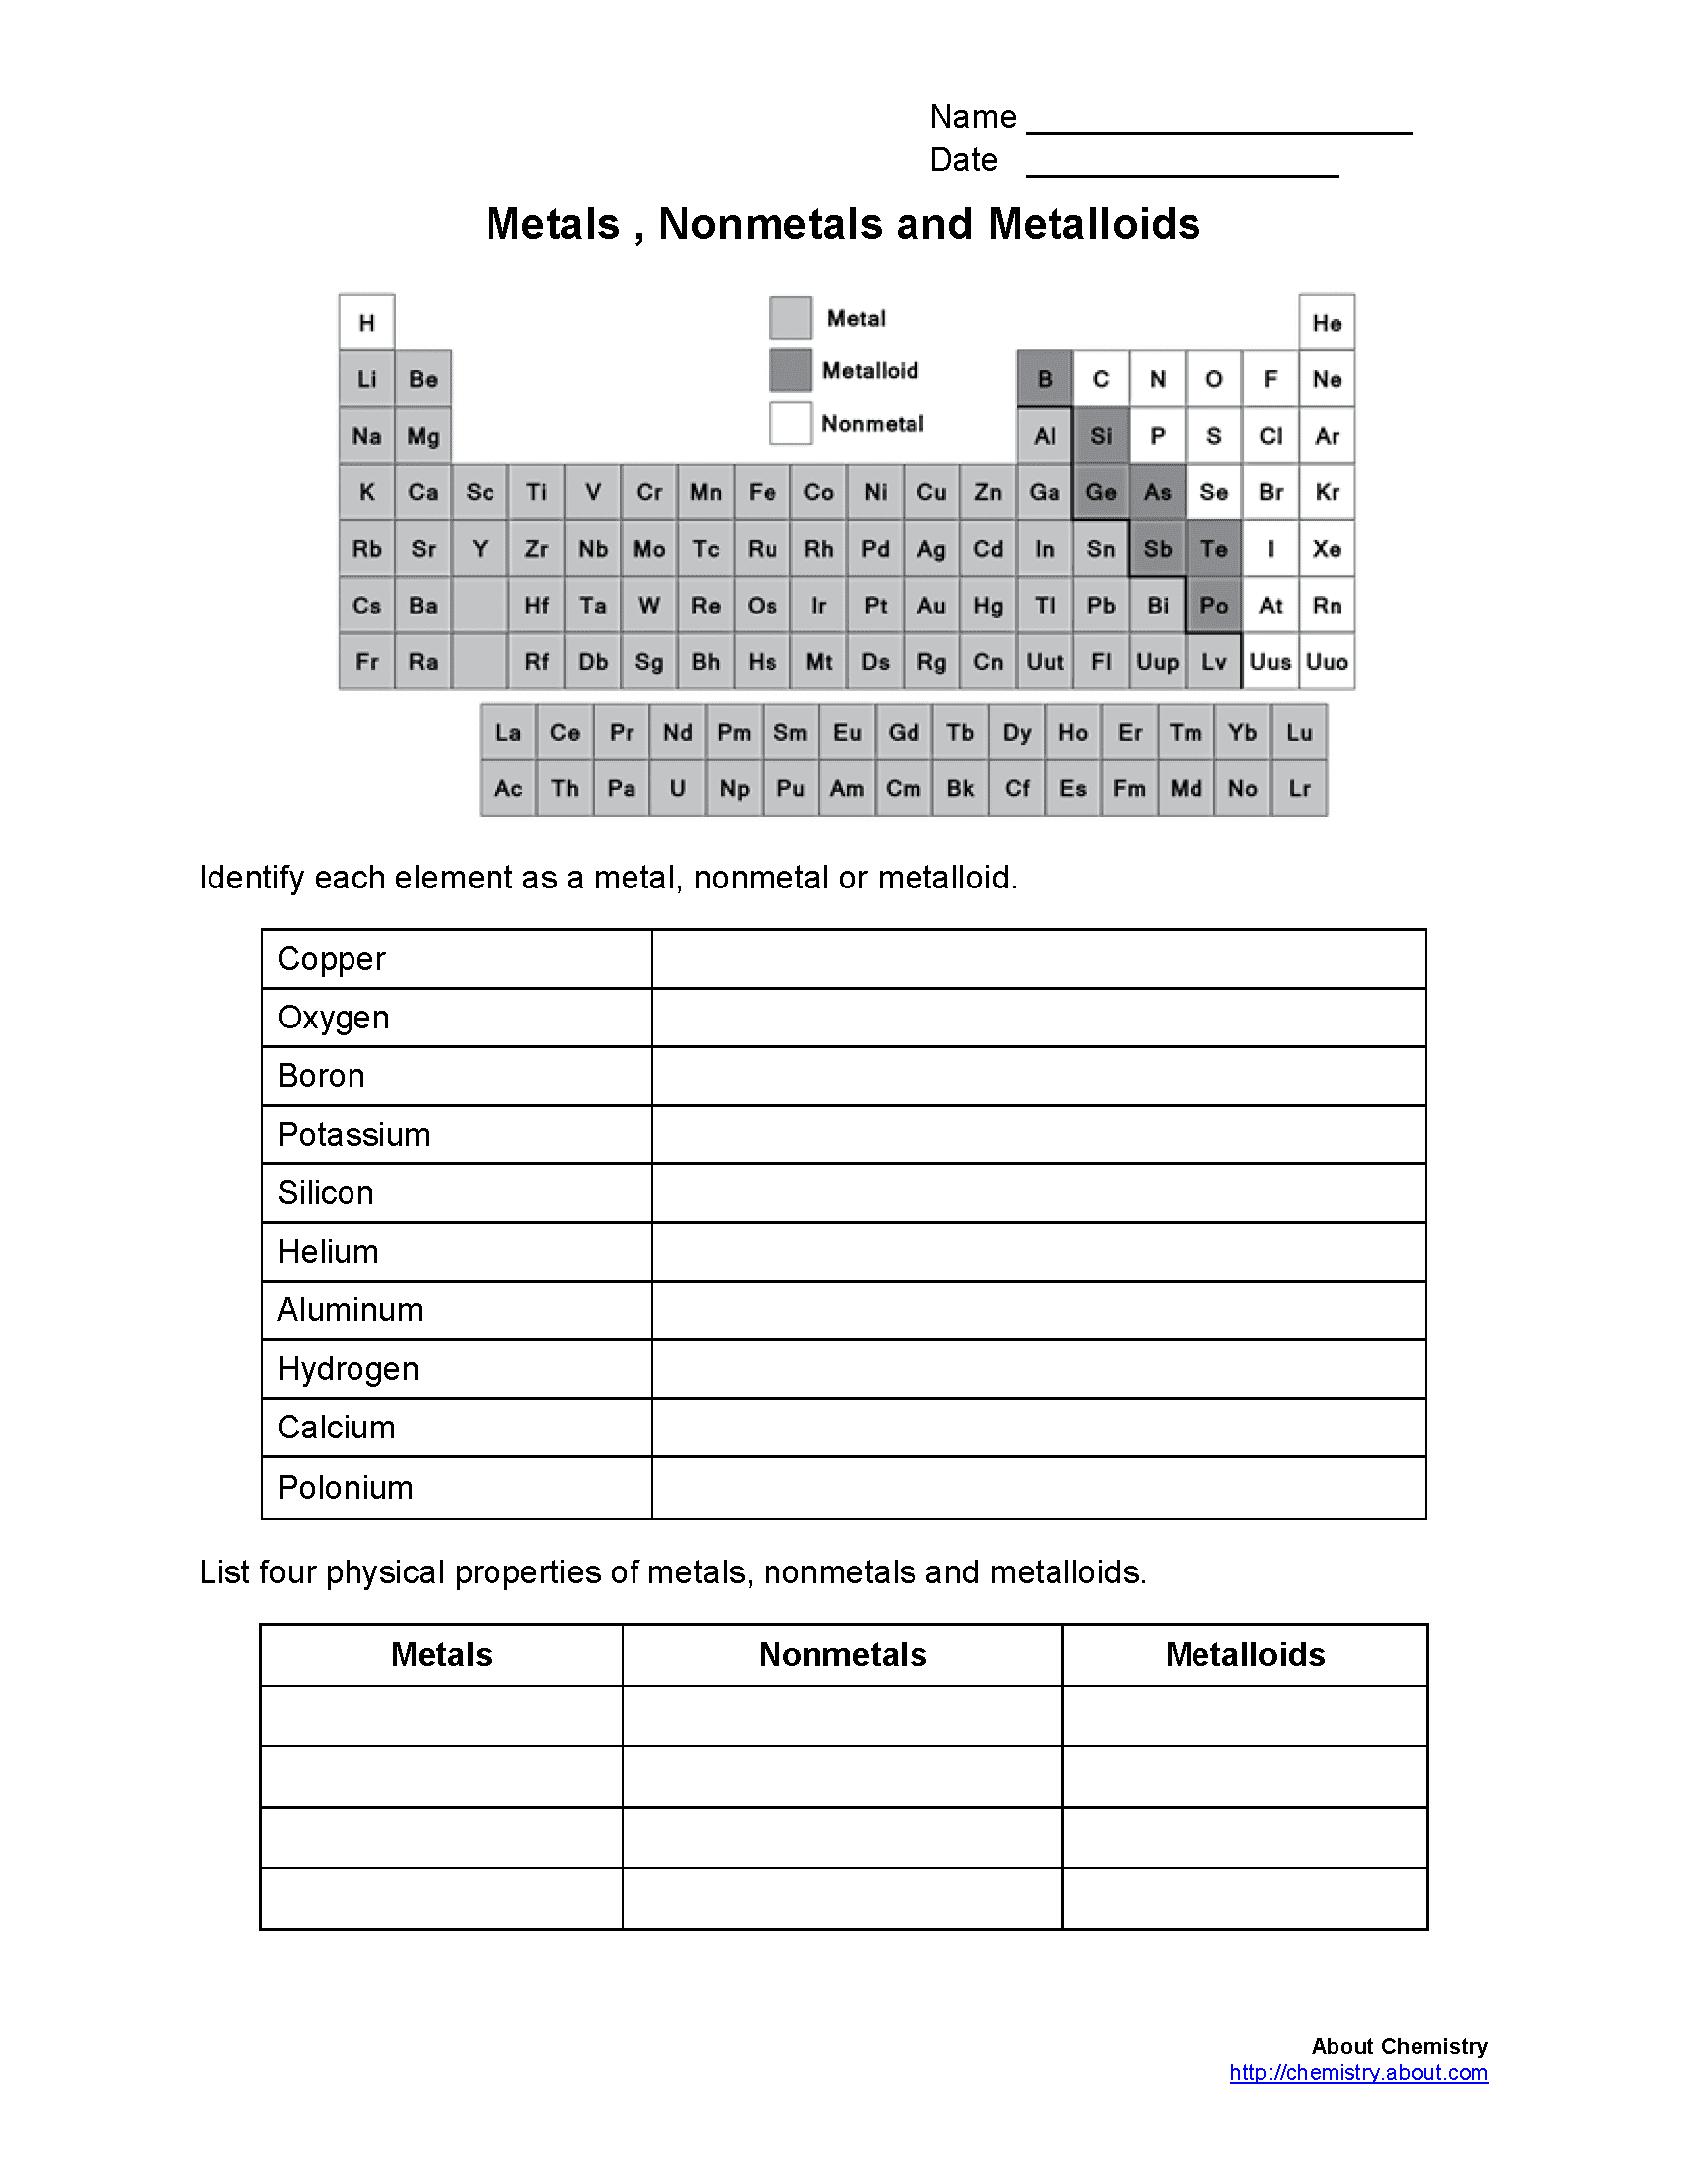 Metals, Nonmetals, Metalloids Worksheet